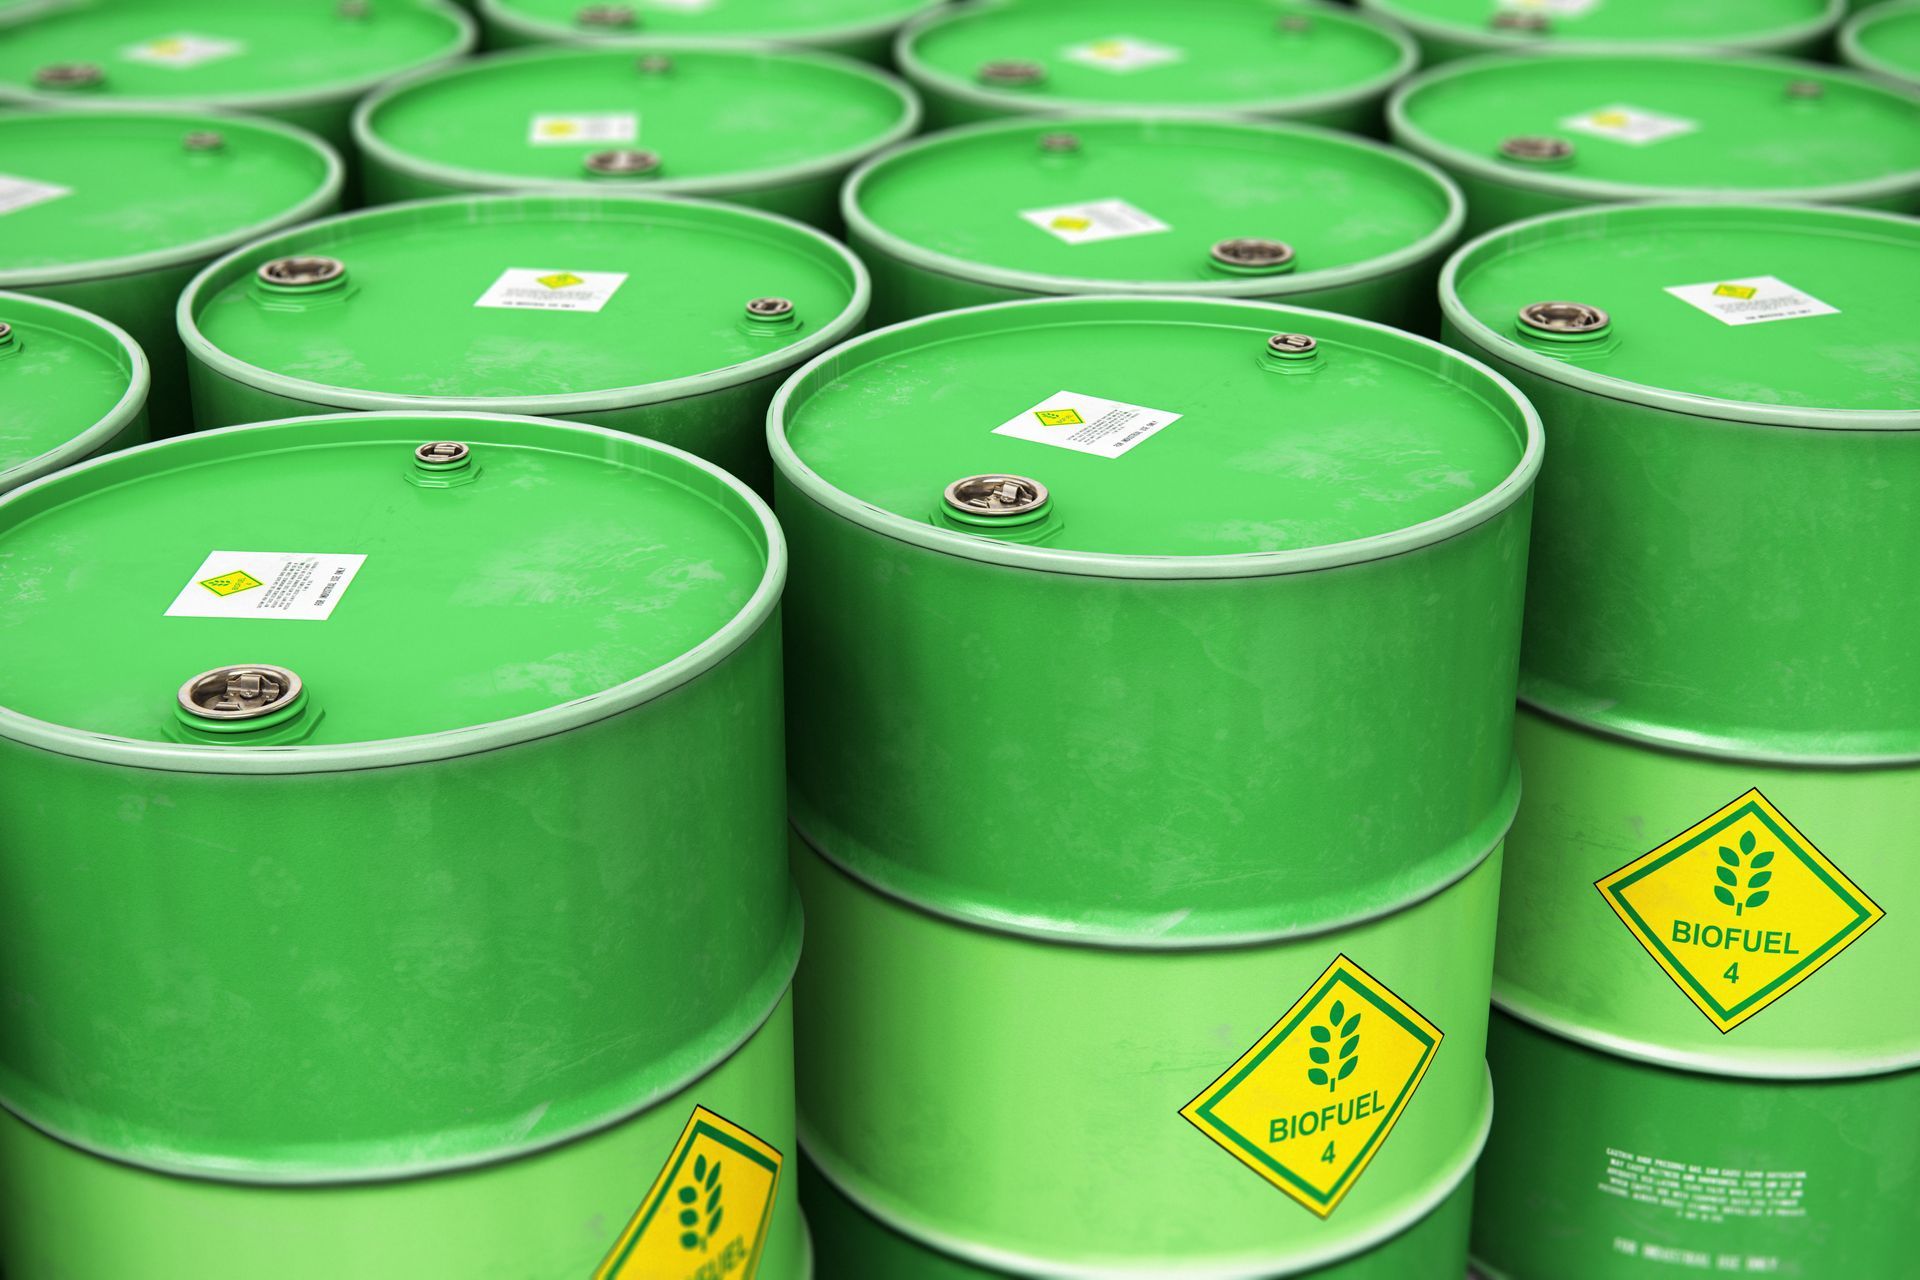 barrels of green biofuel lined up